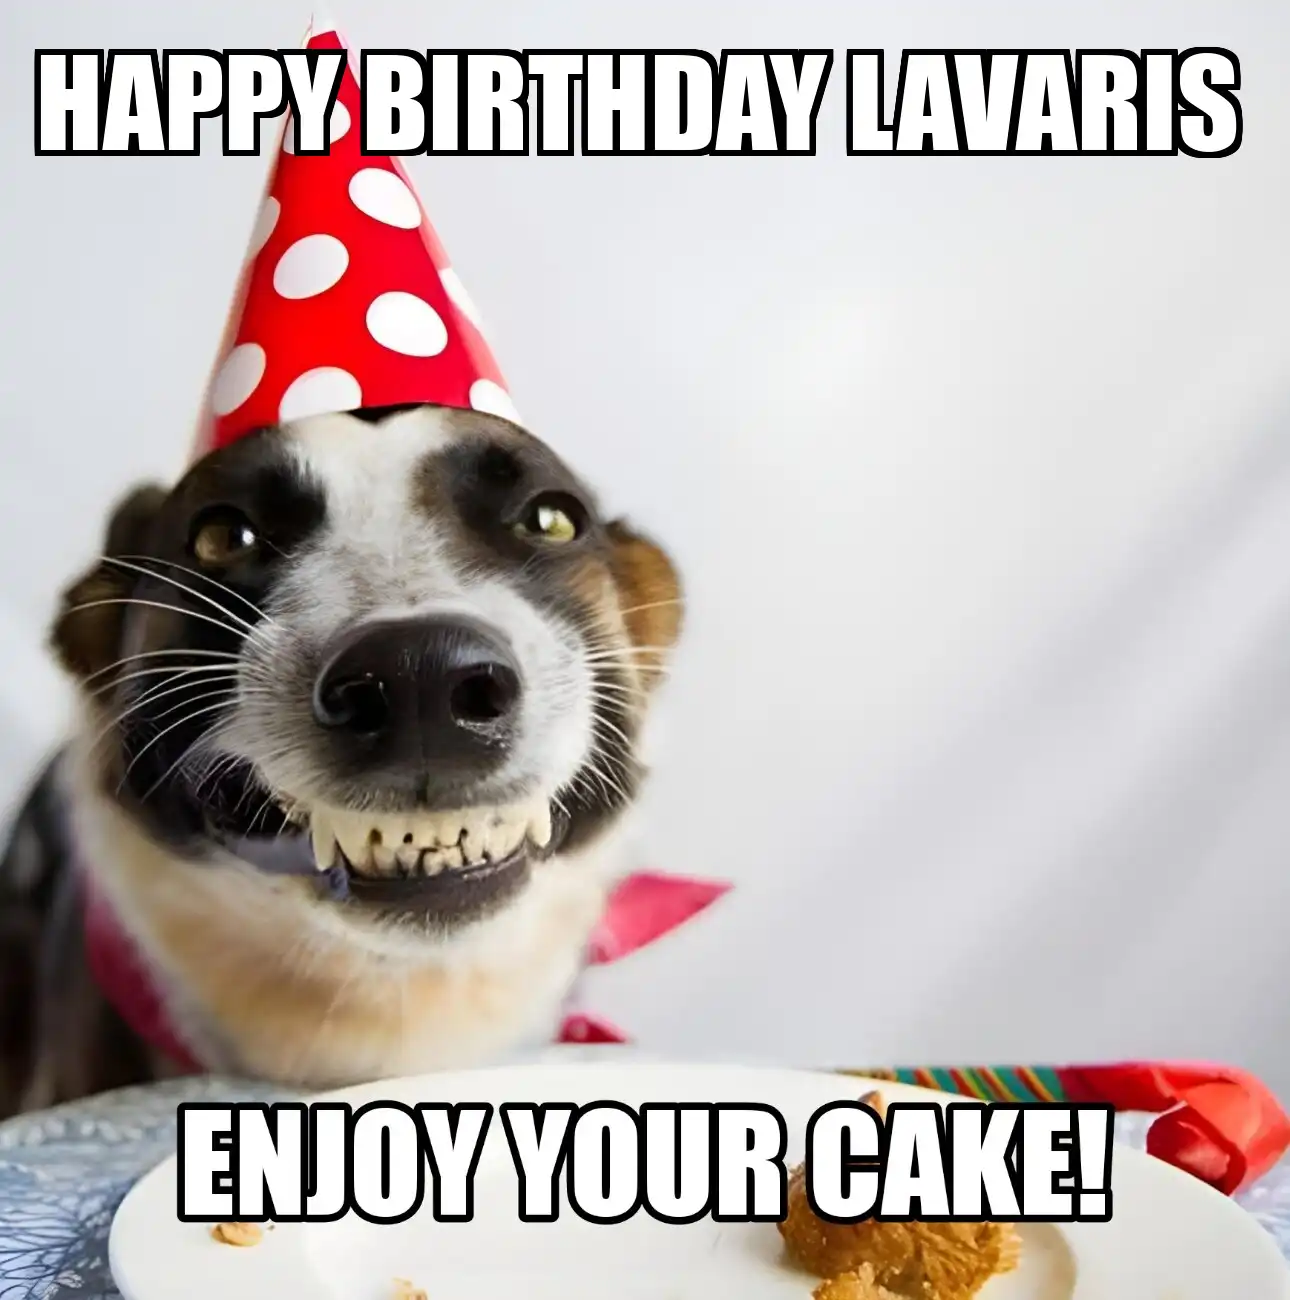 Happy Birthday Lavaris Enjoy Your Cake Dog Meme